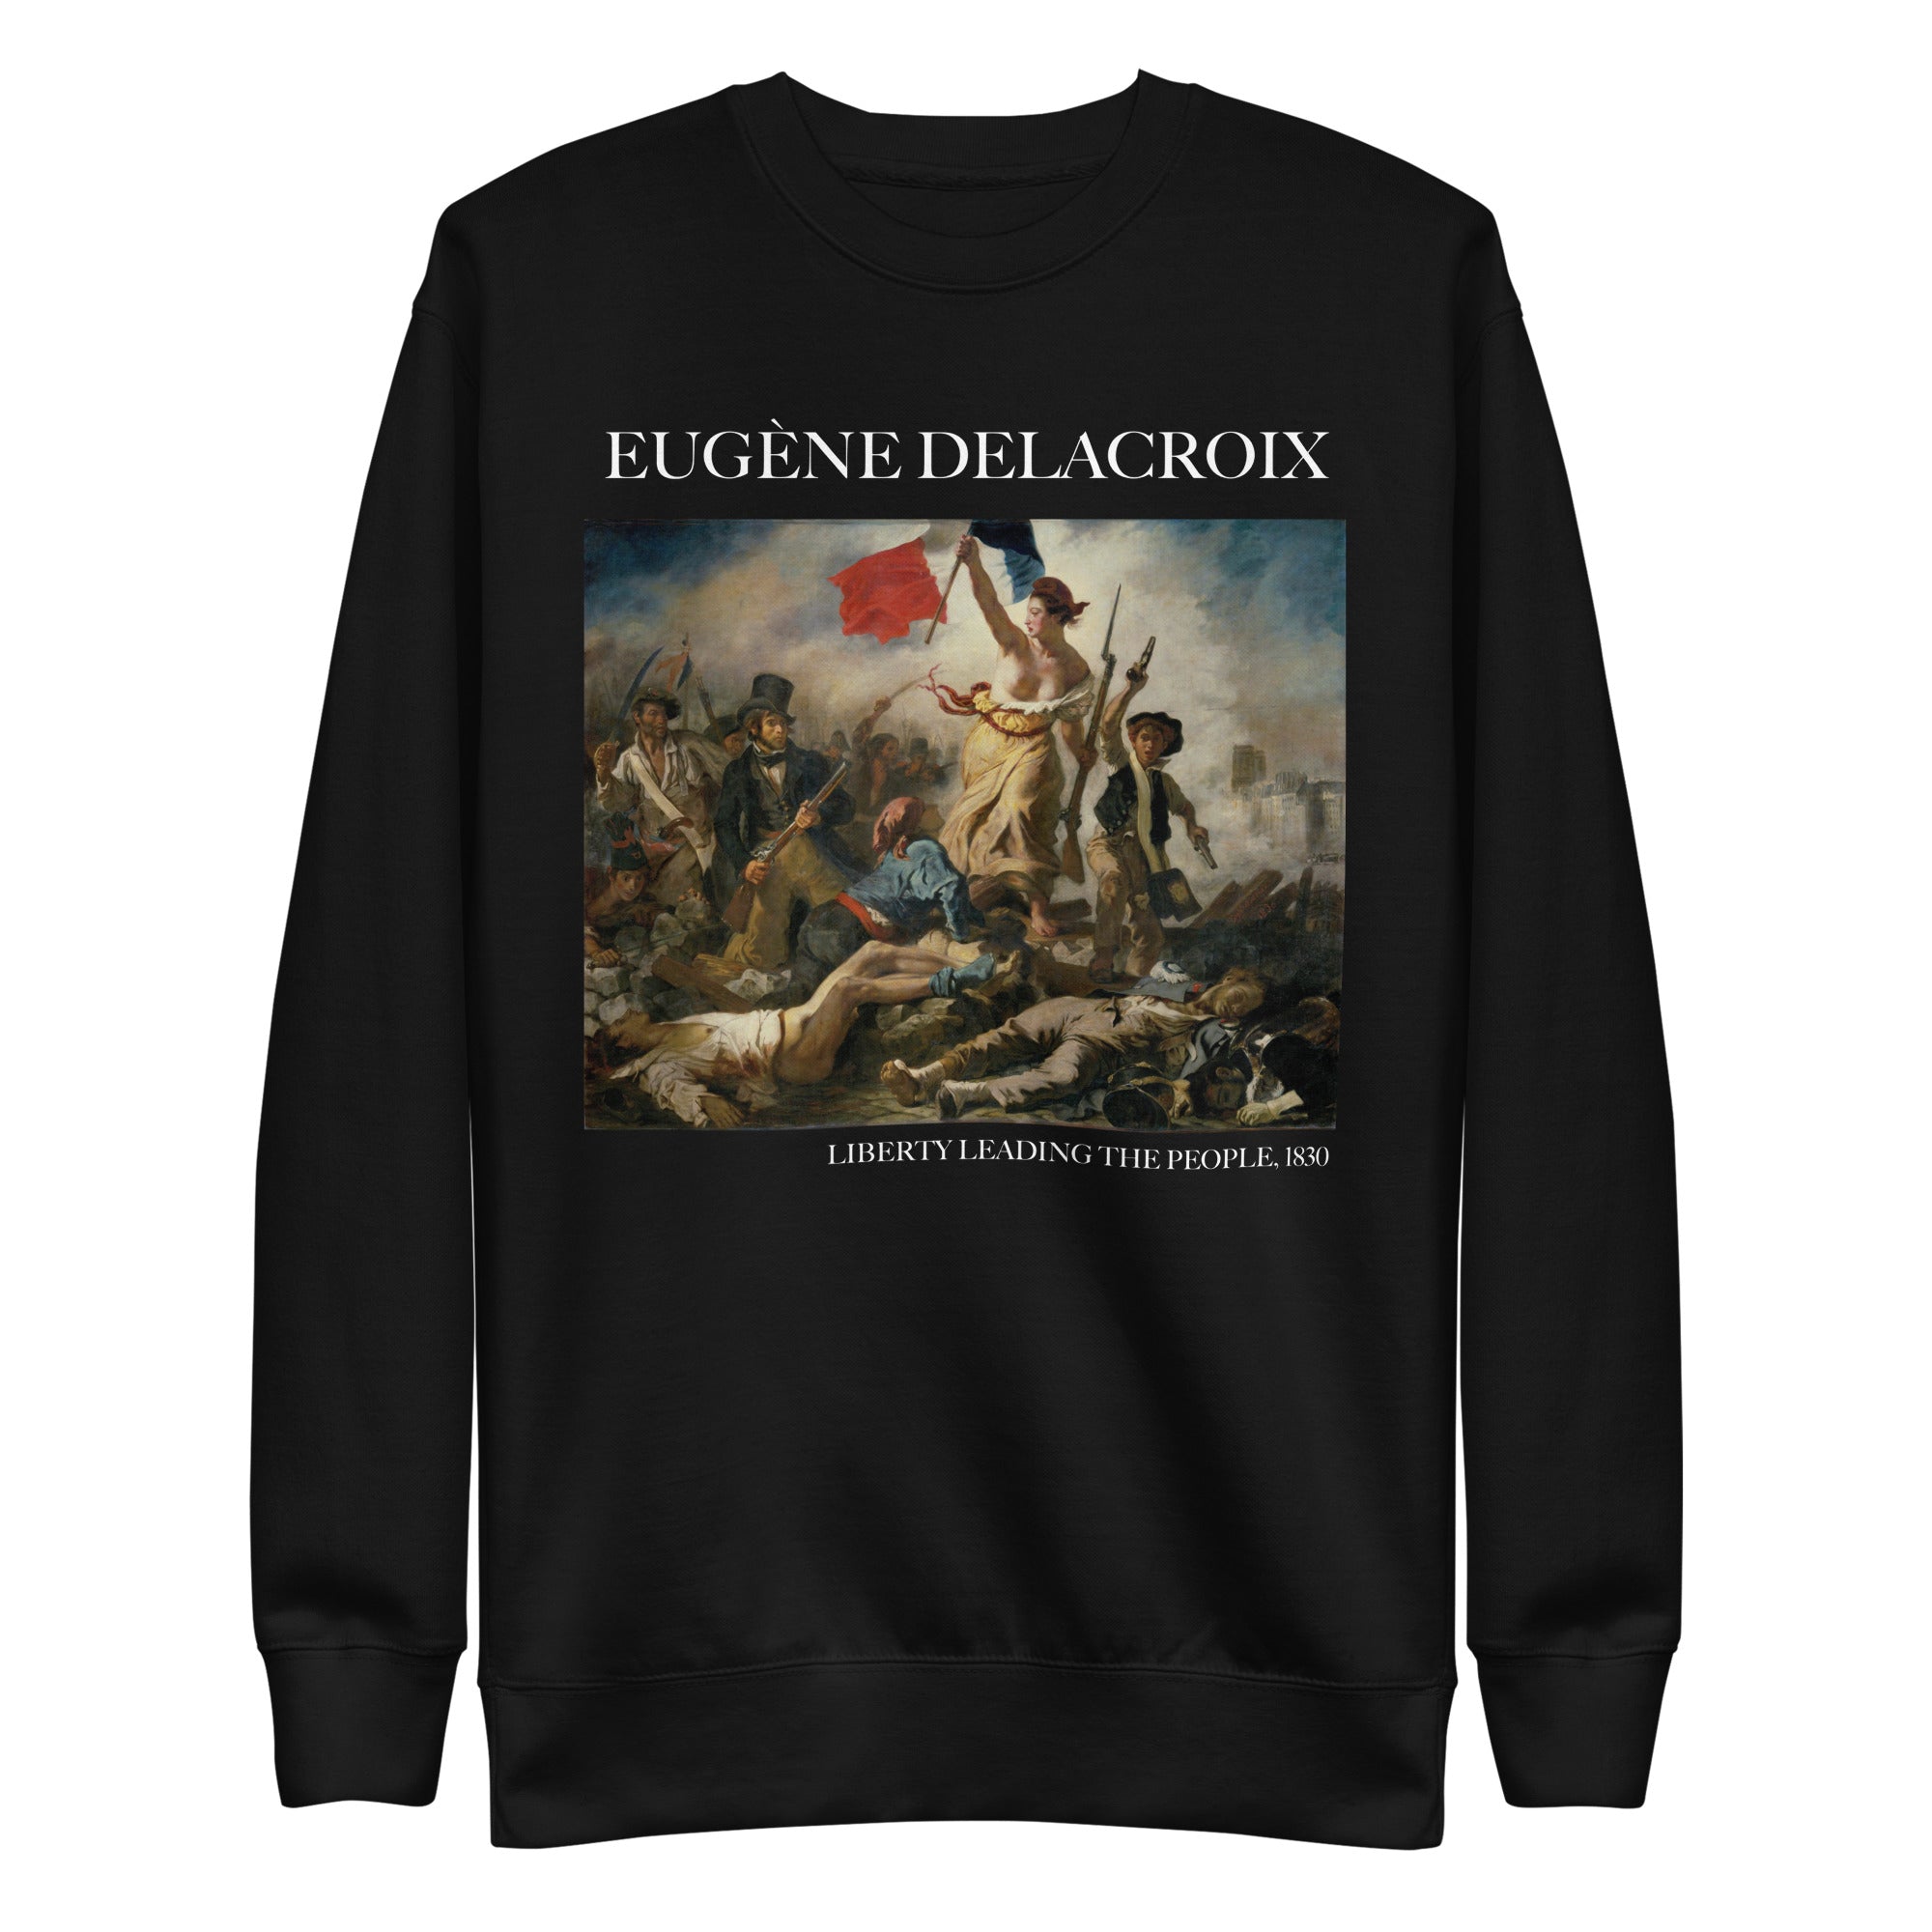 Eugène Delacroix 'Liberty Leading the People' Famous Painting Sweatshirt | Unisex Premium Sweatshirt